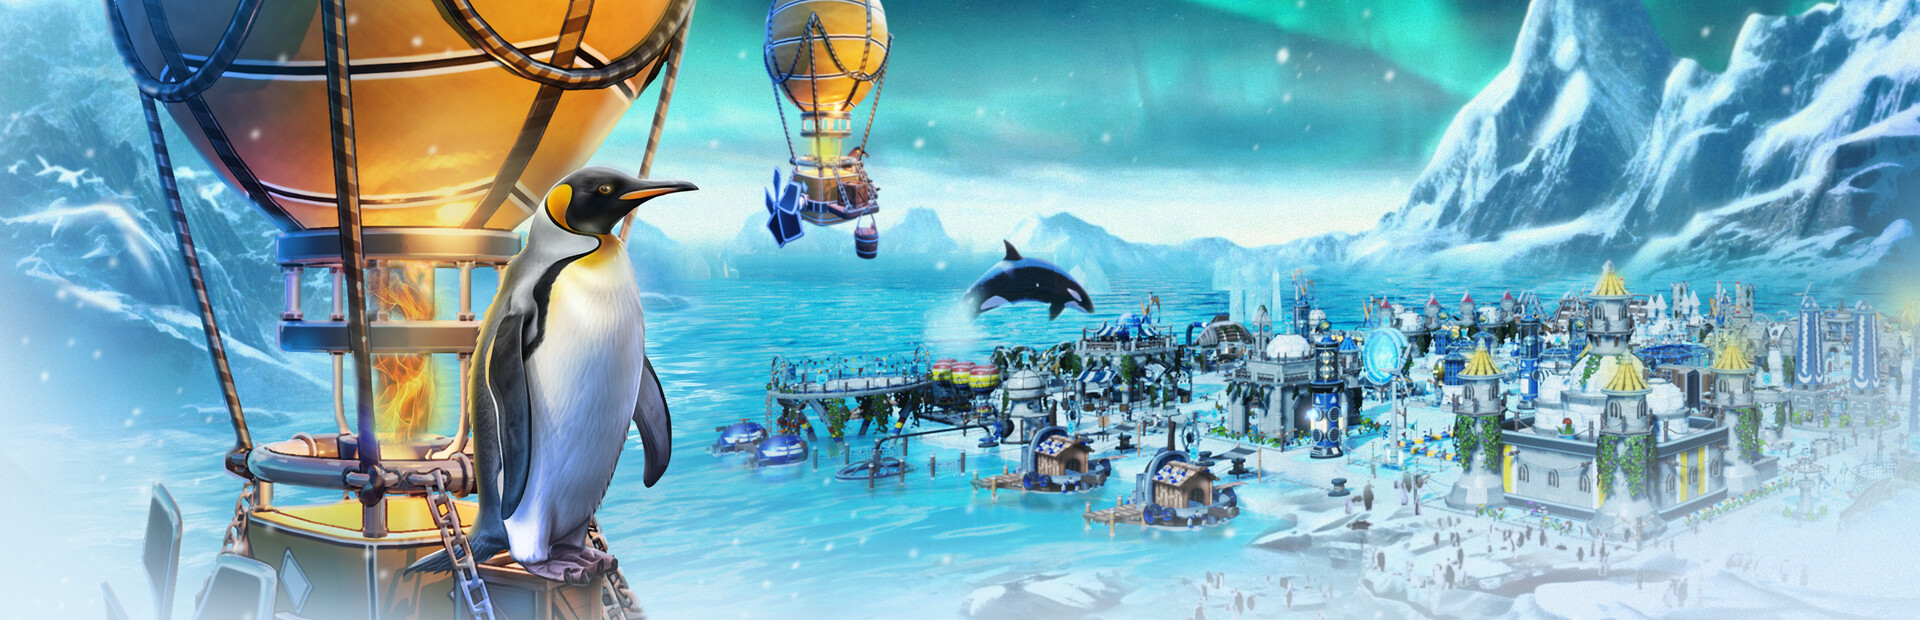 United Penguin Kingdom cover image